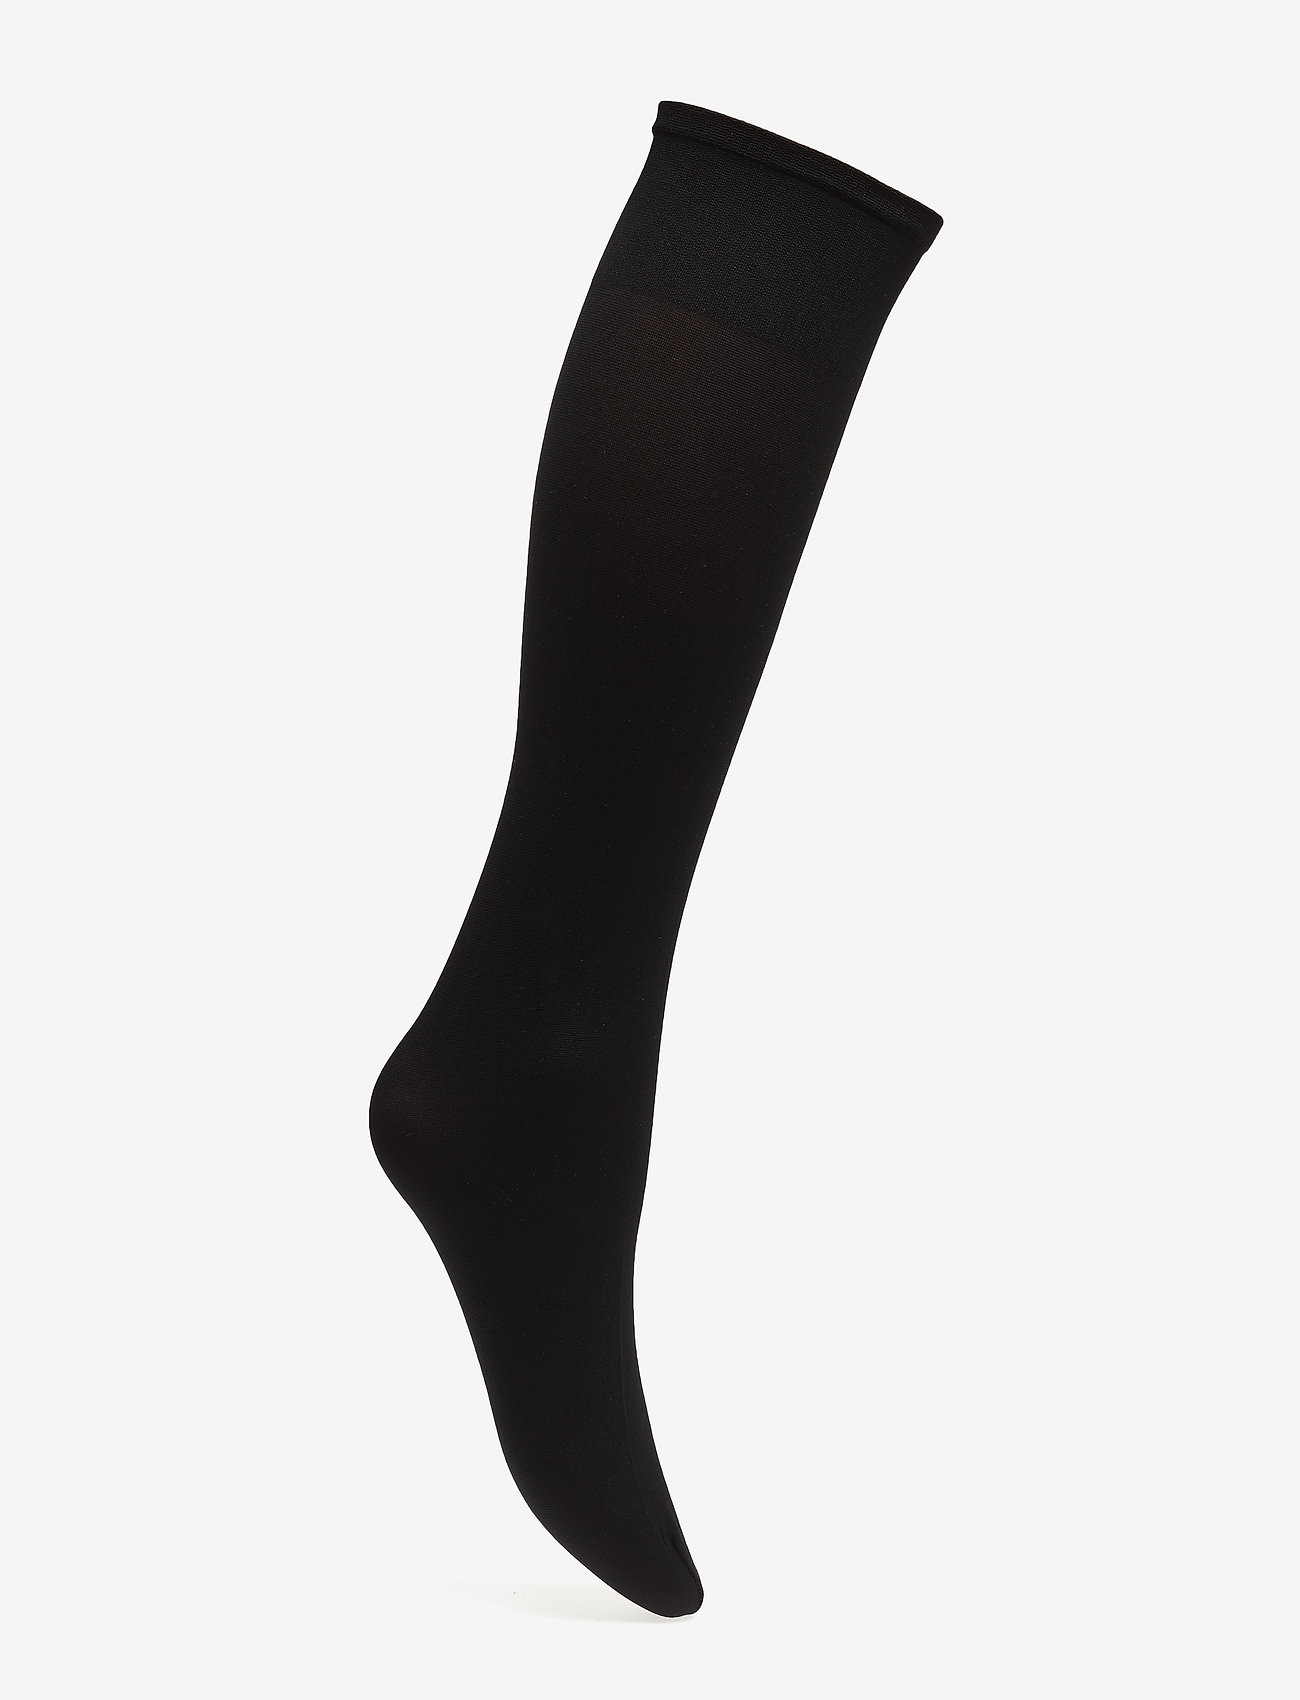 Swedish Stockings Ingrid Premium Knee High 60d